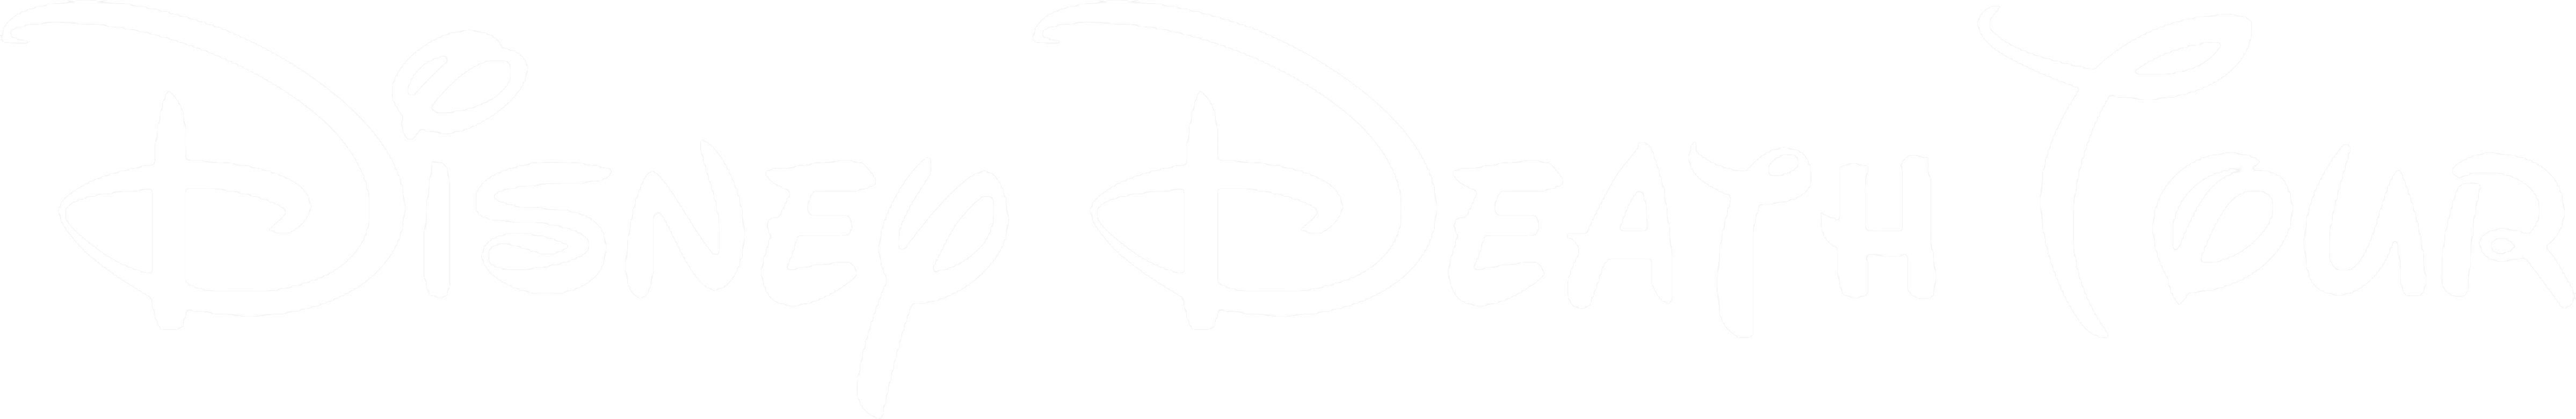 Disney Death Tour logo